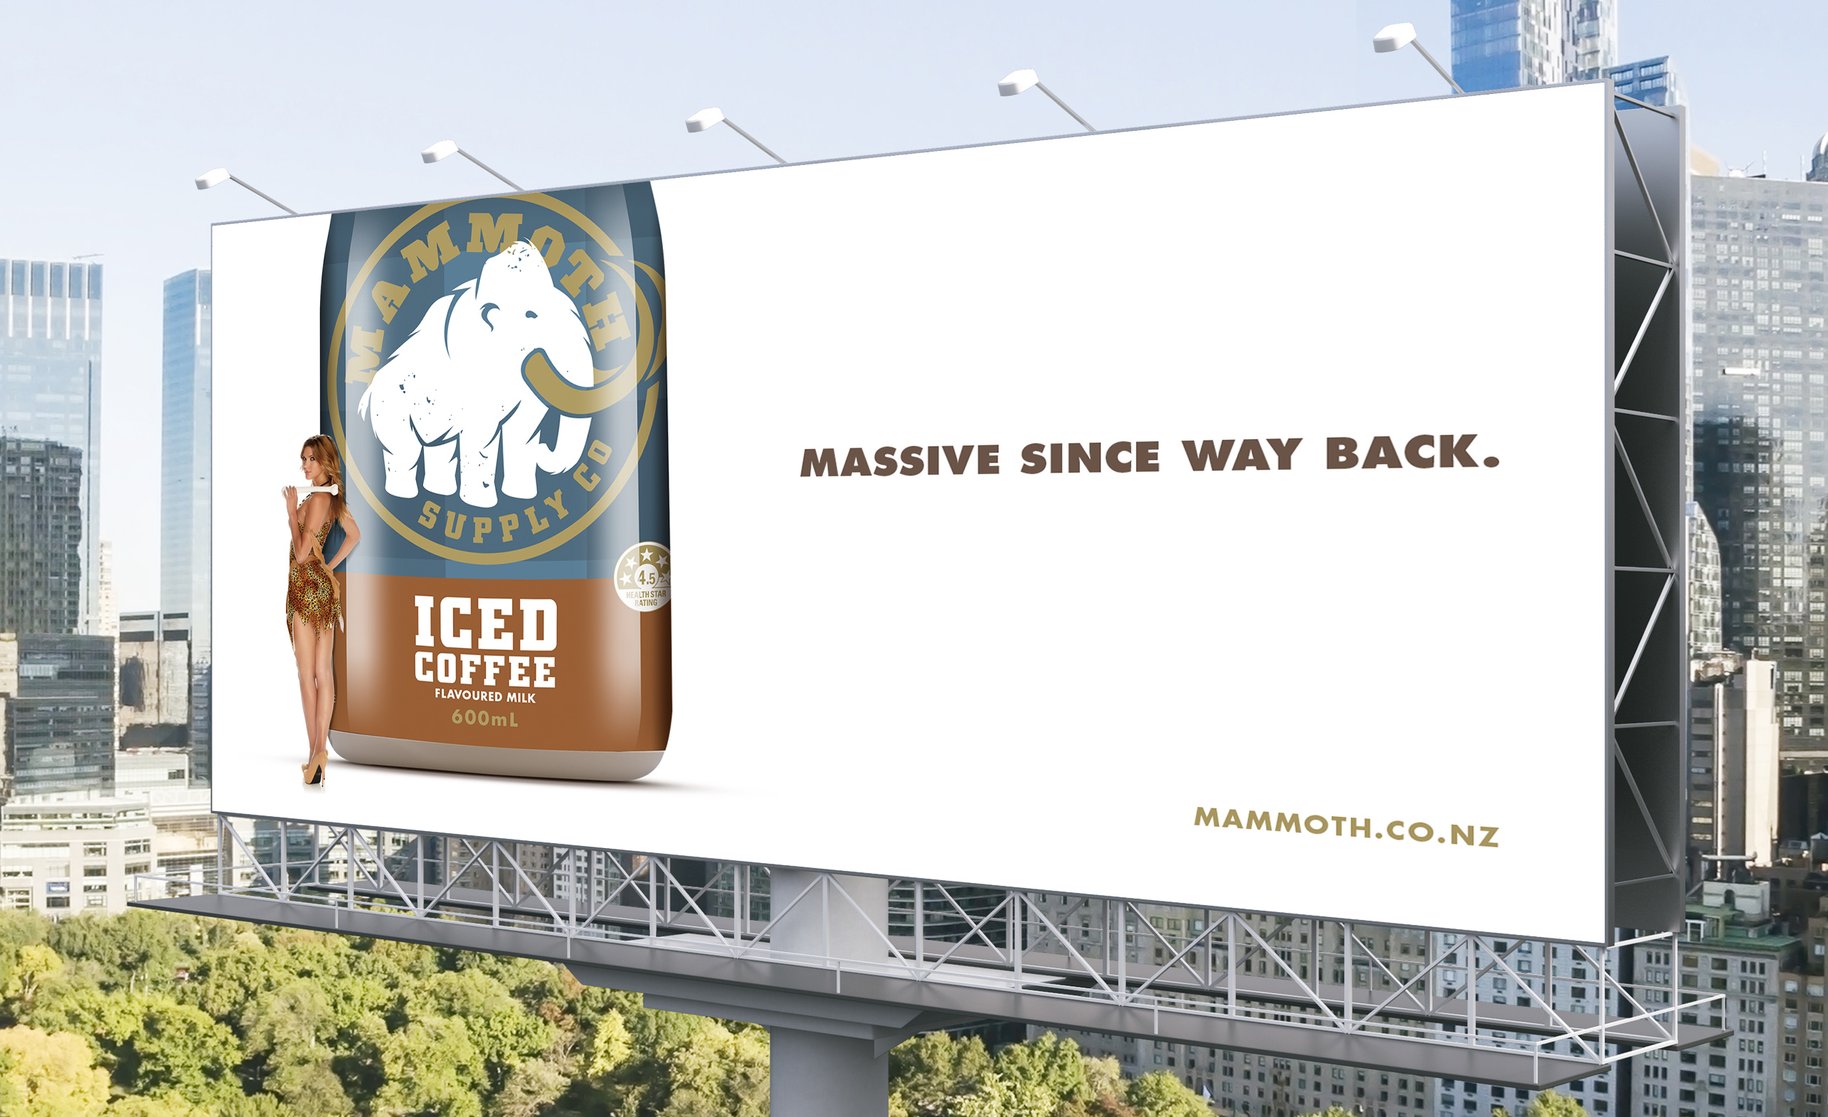 Mammoth billboard